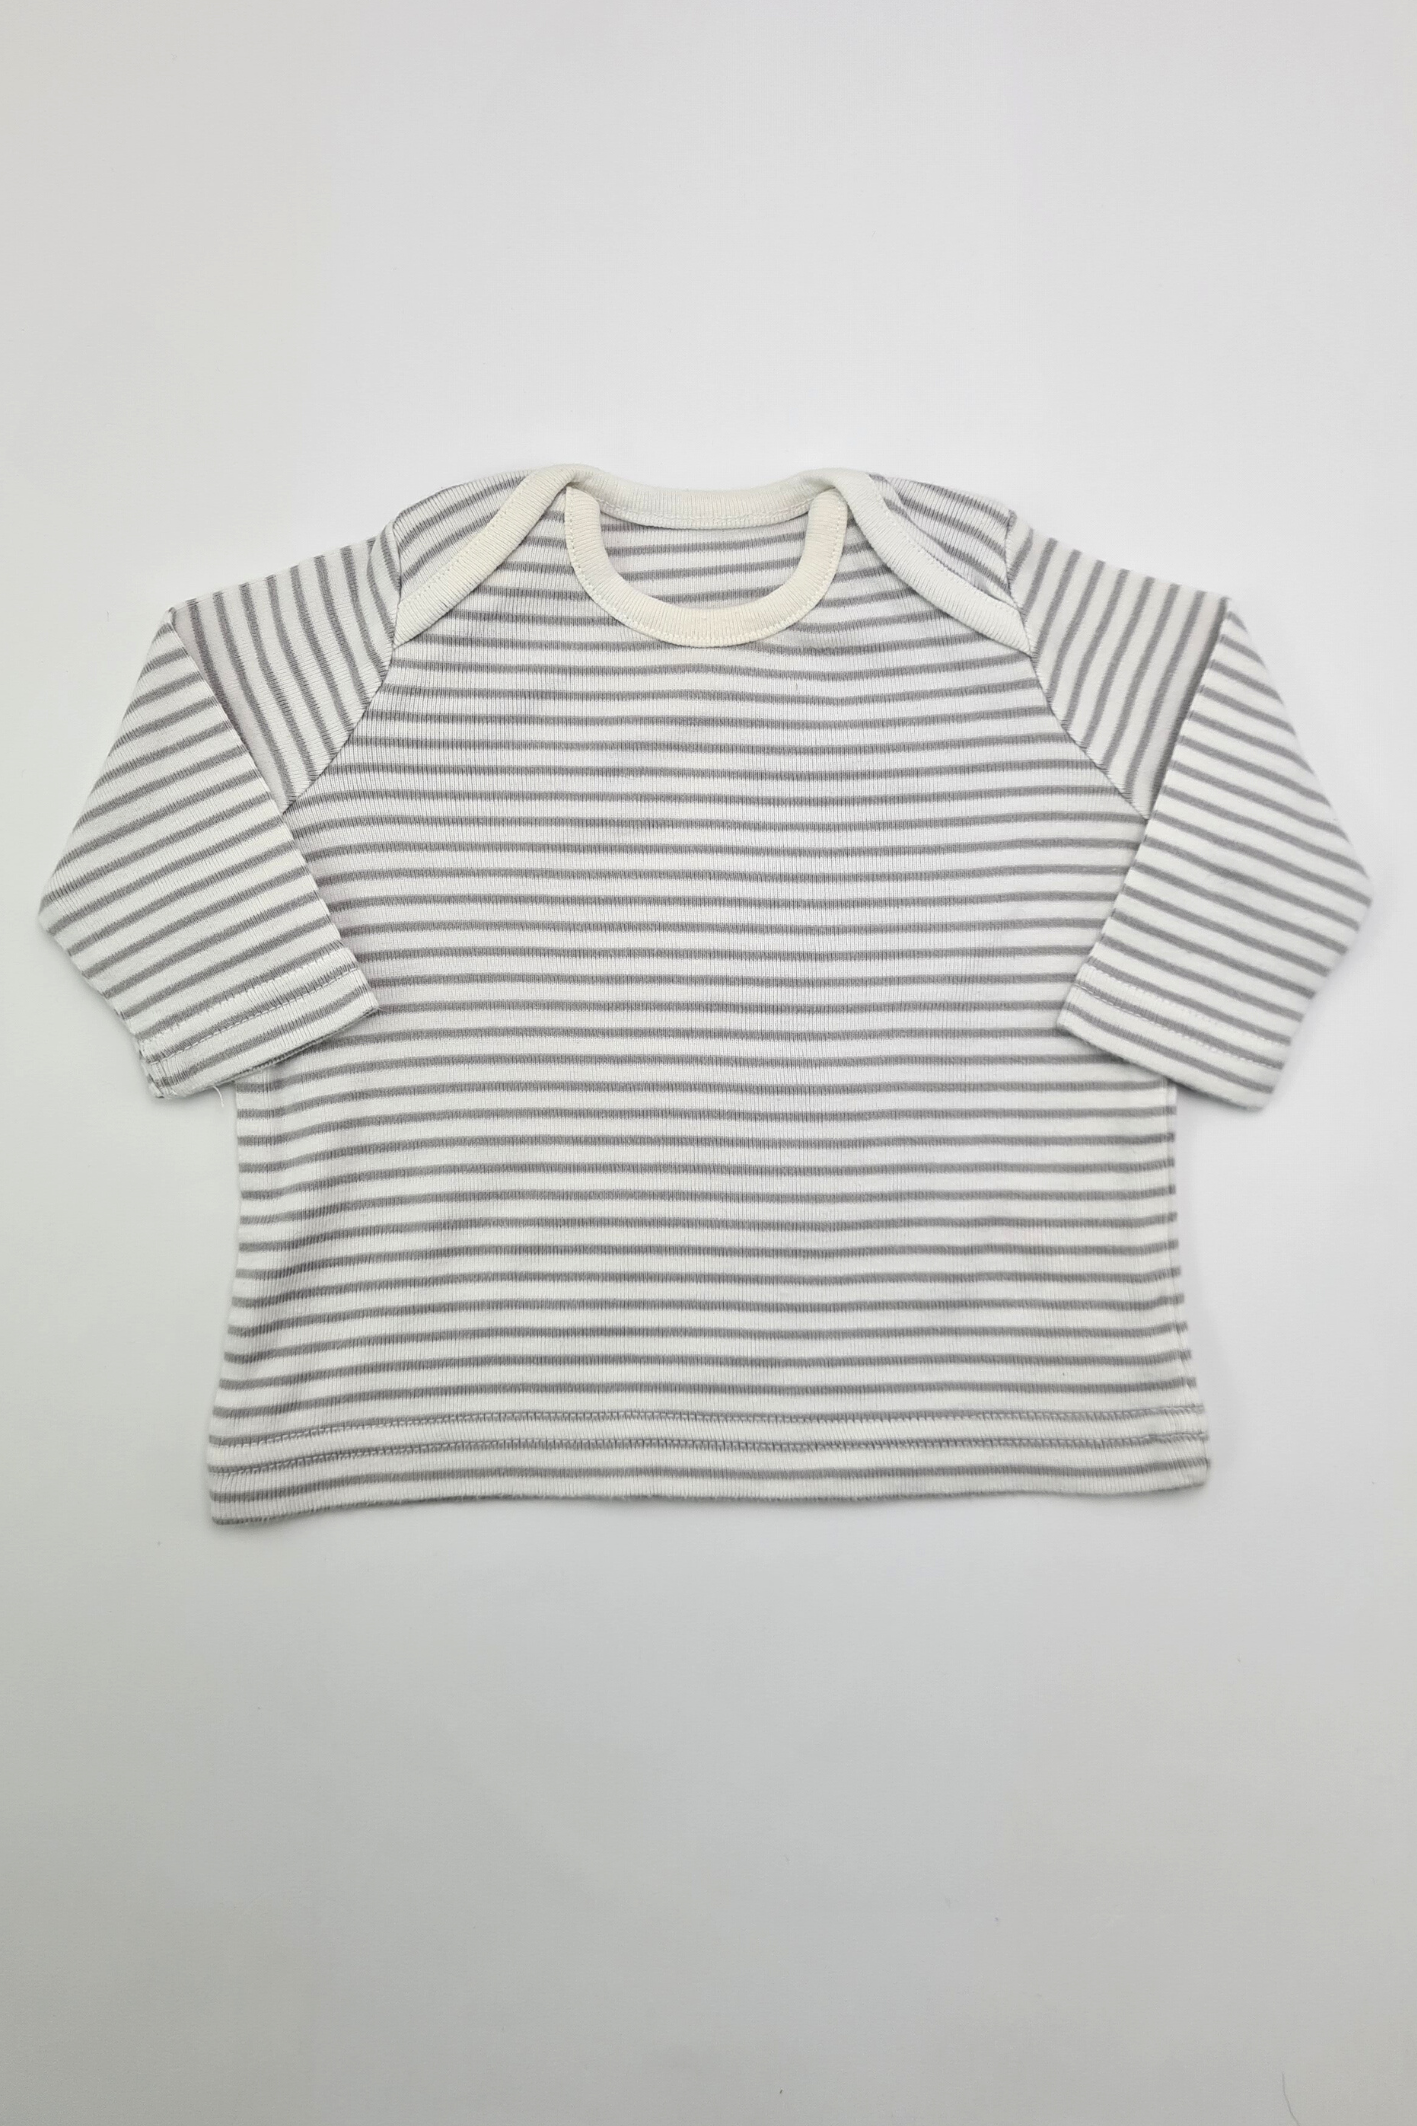 0-3m - 100% Cotton Grey & White Striped Top (George)